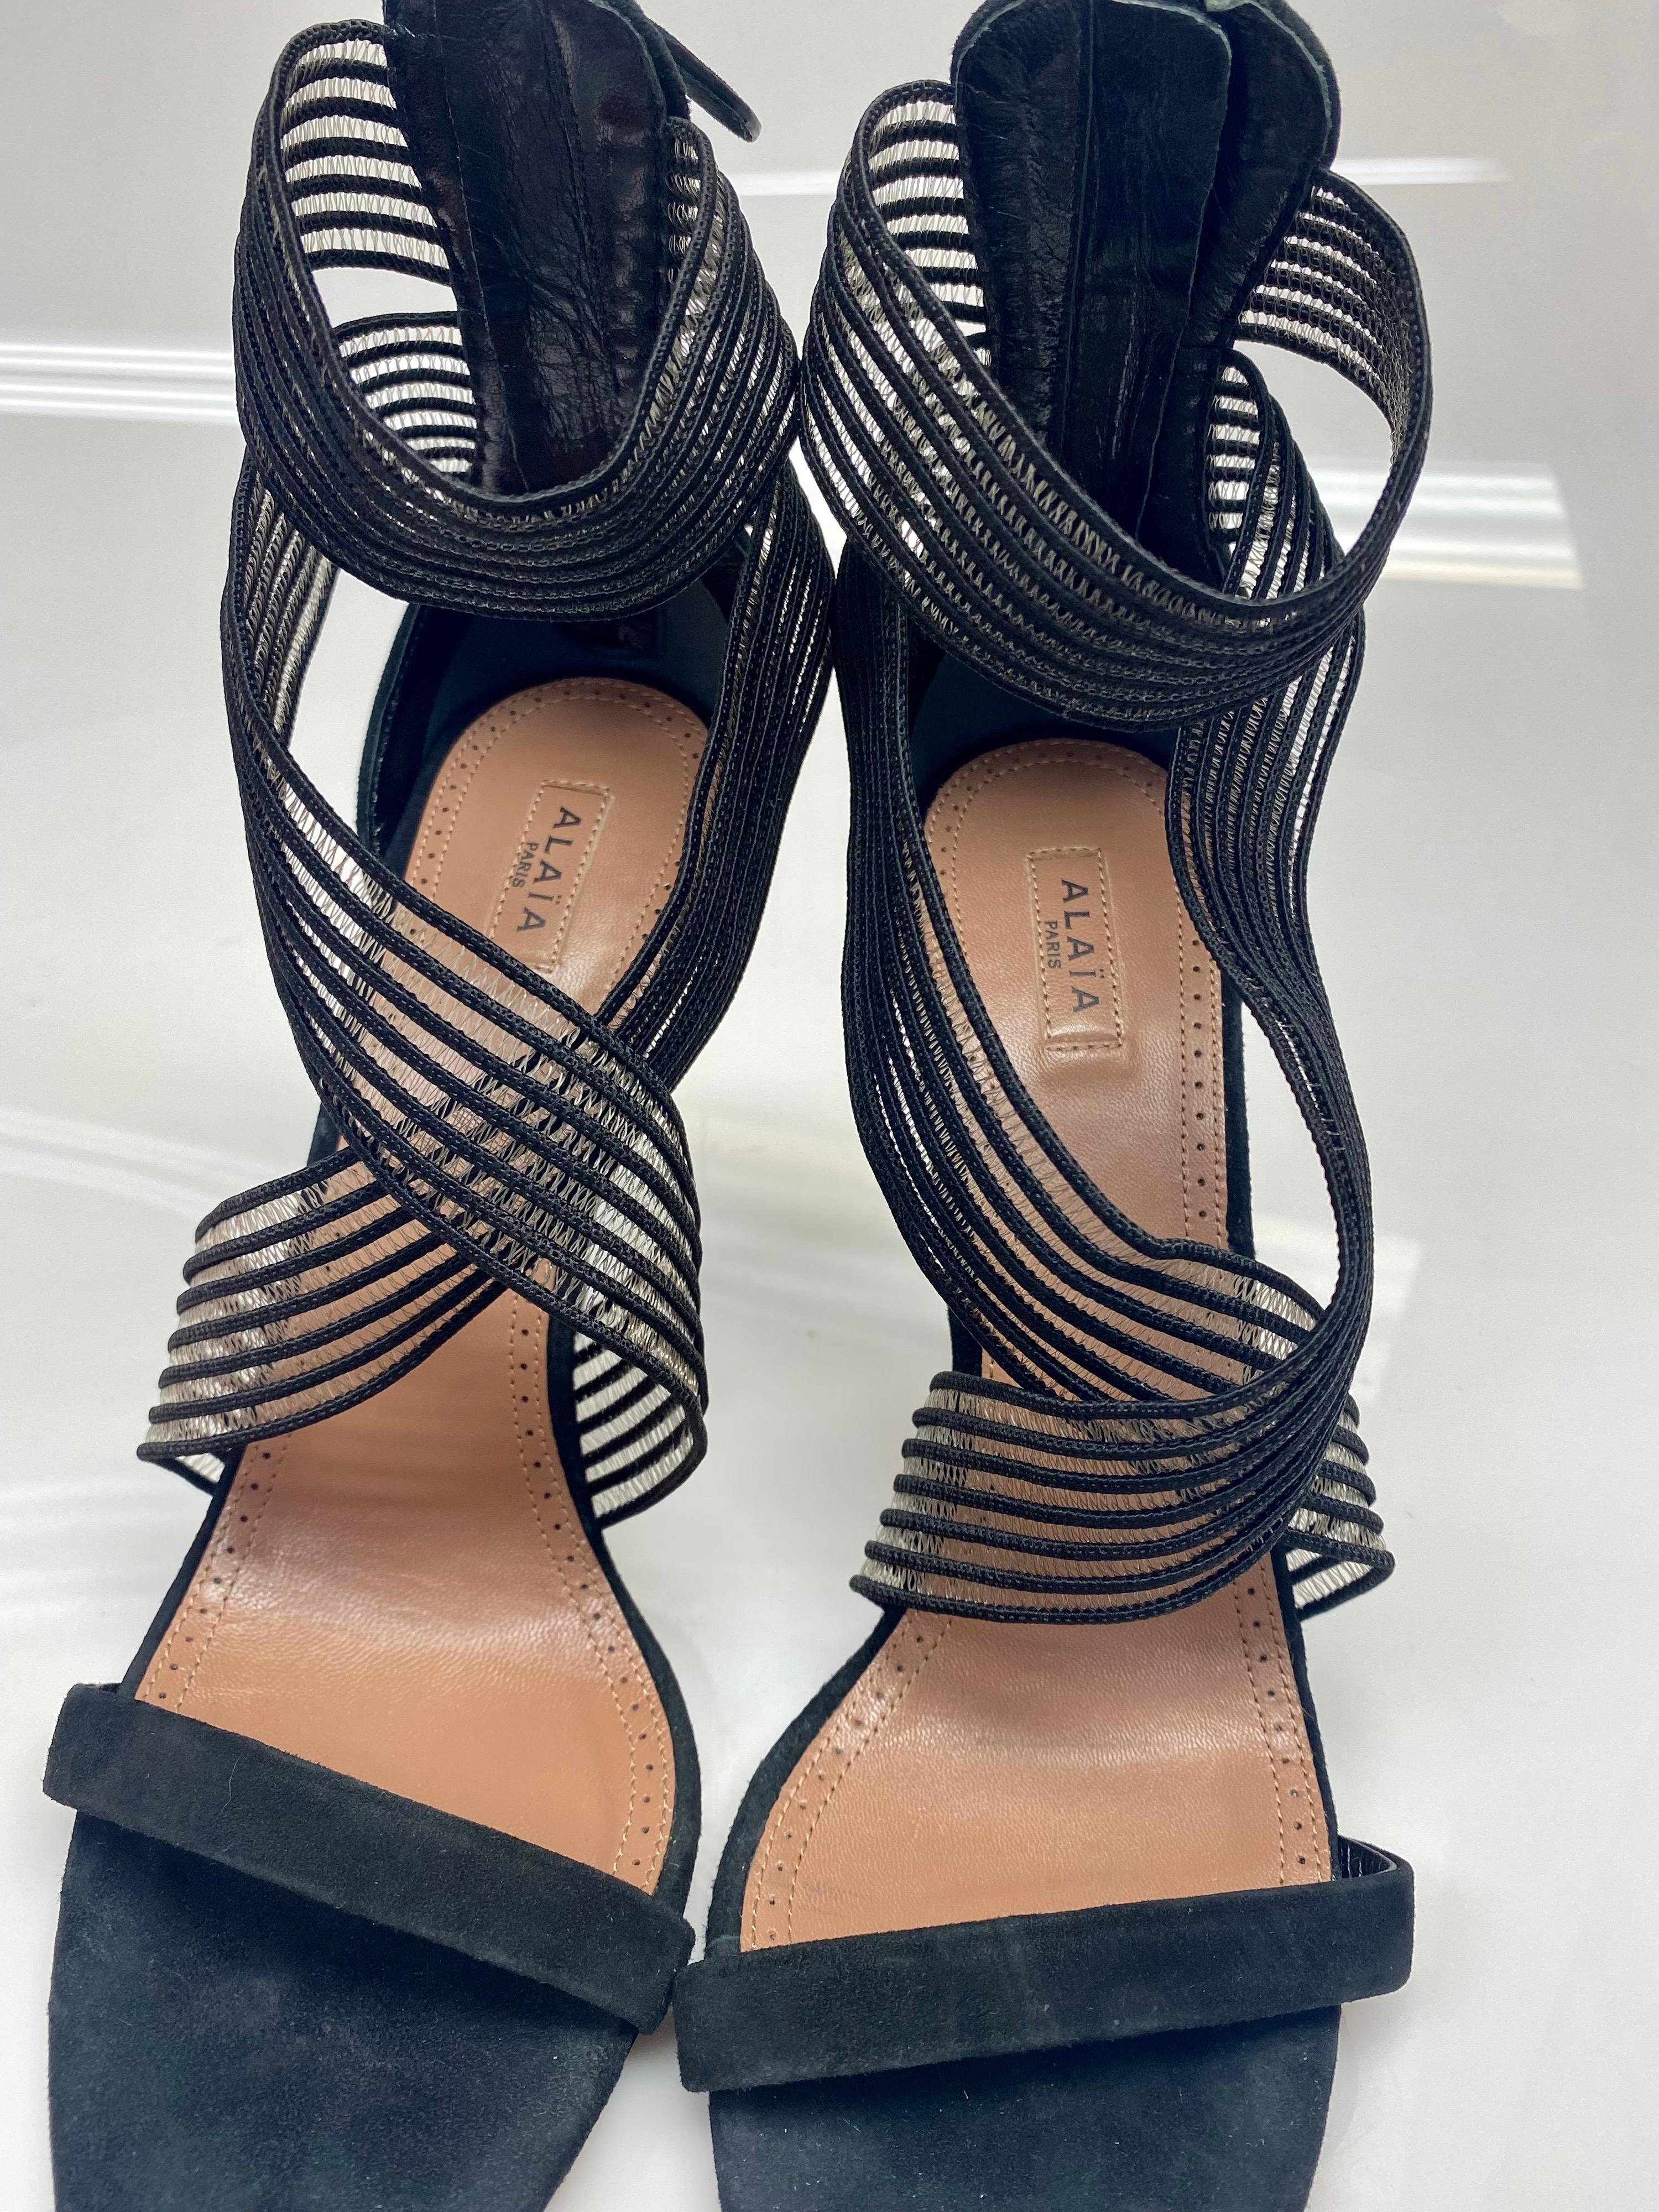 Alaia Black Suede Ribbon Sandals Heels Size 40 For Sale 4